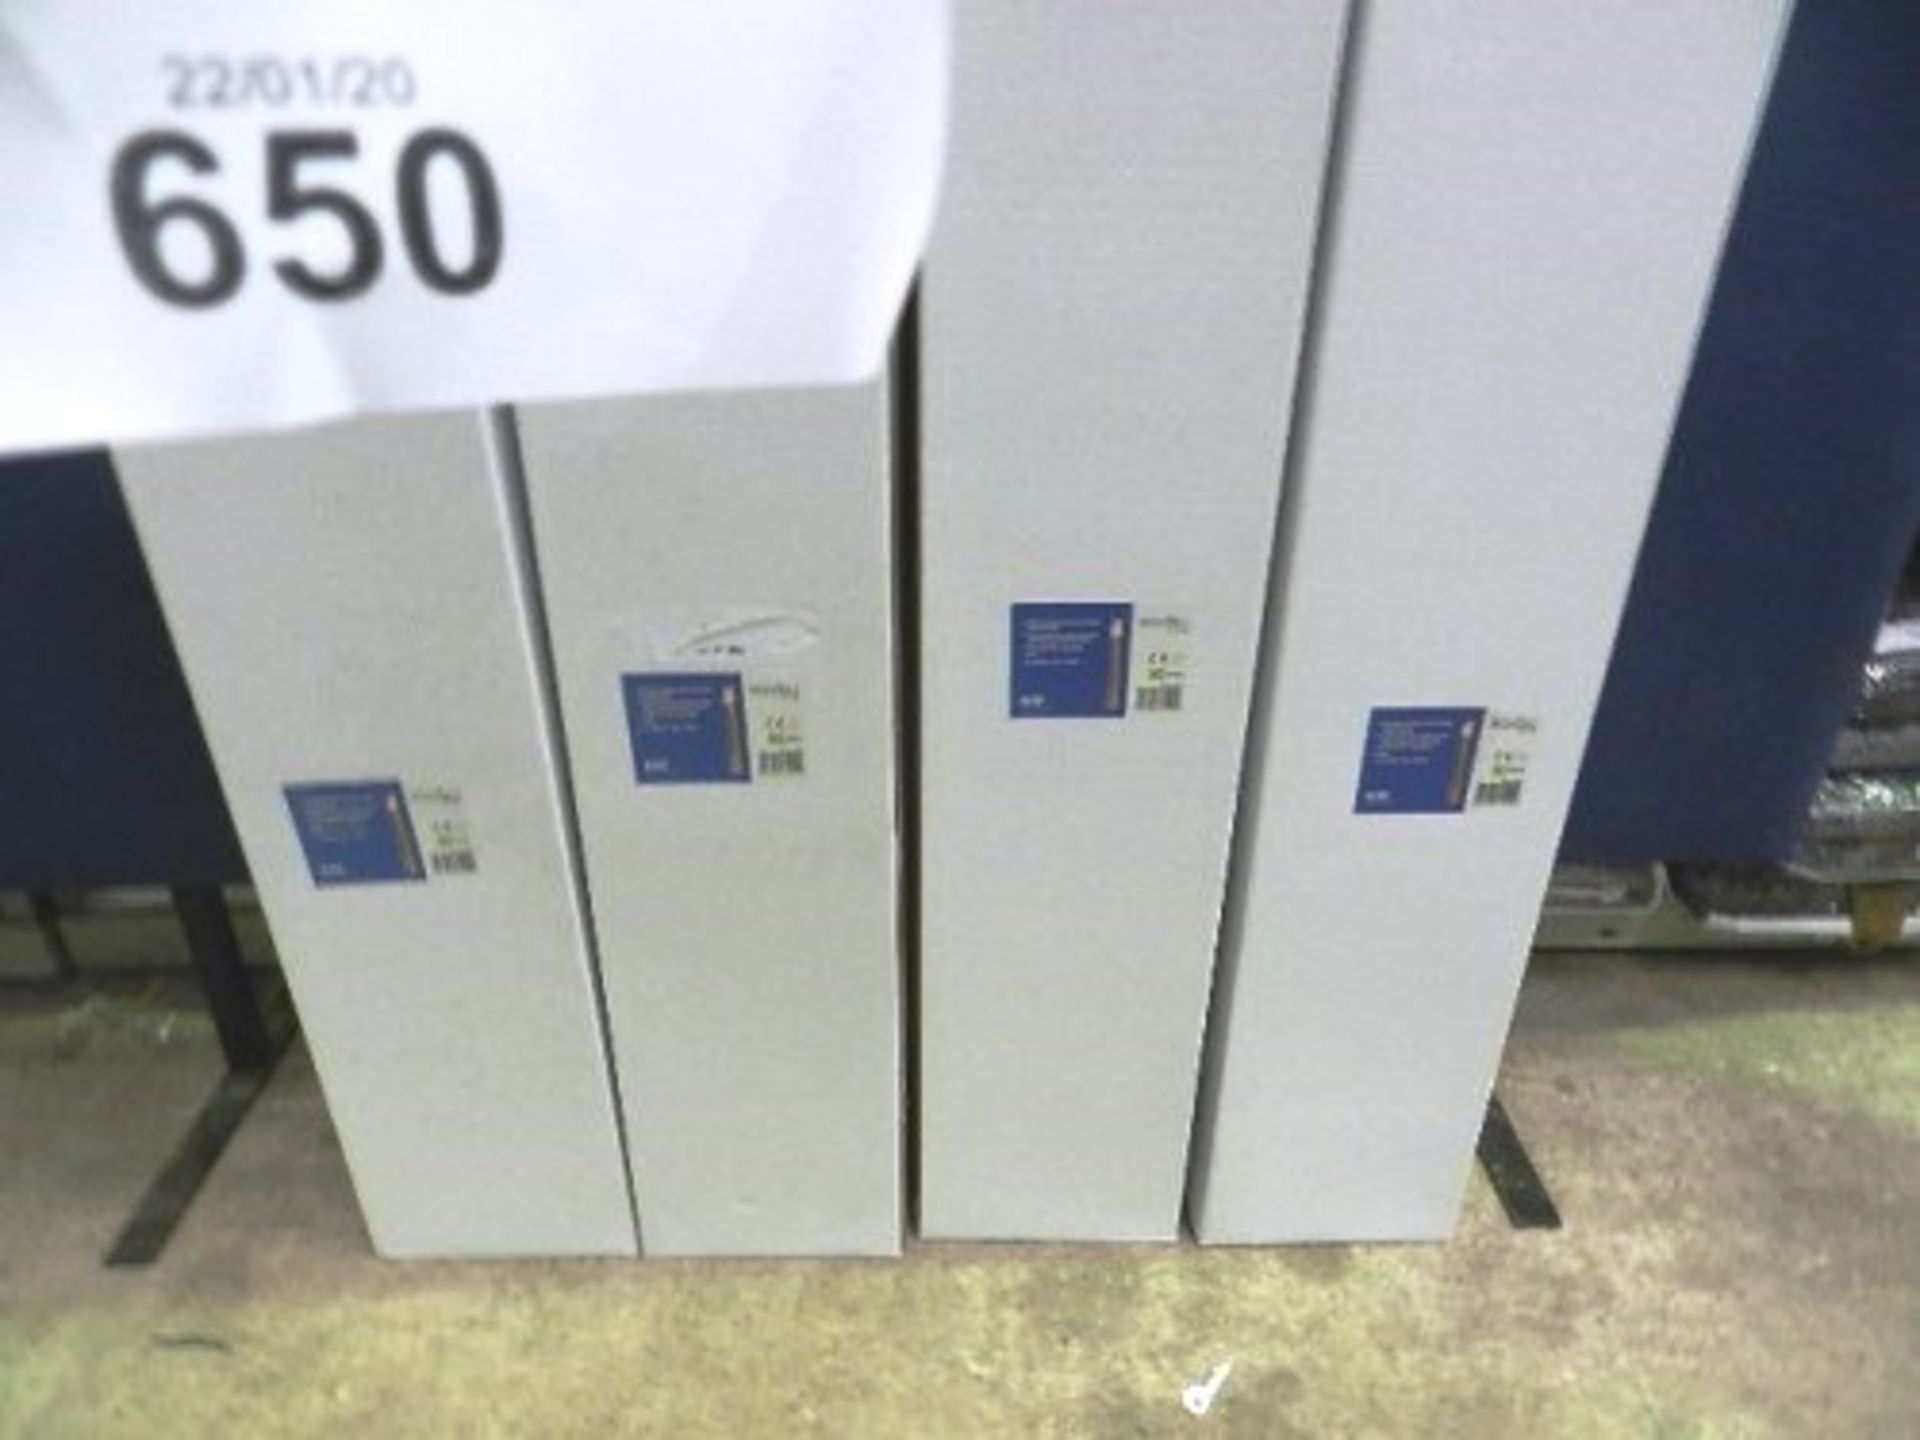 4 x Saxby Bliss Bollards, P.N. 13799, RRP £55.00 each - New in box (ES8)